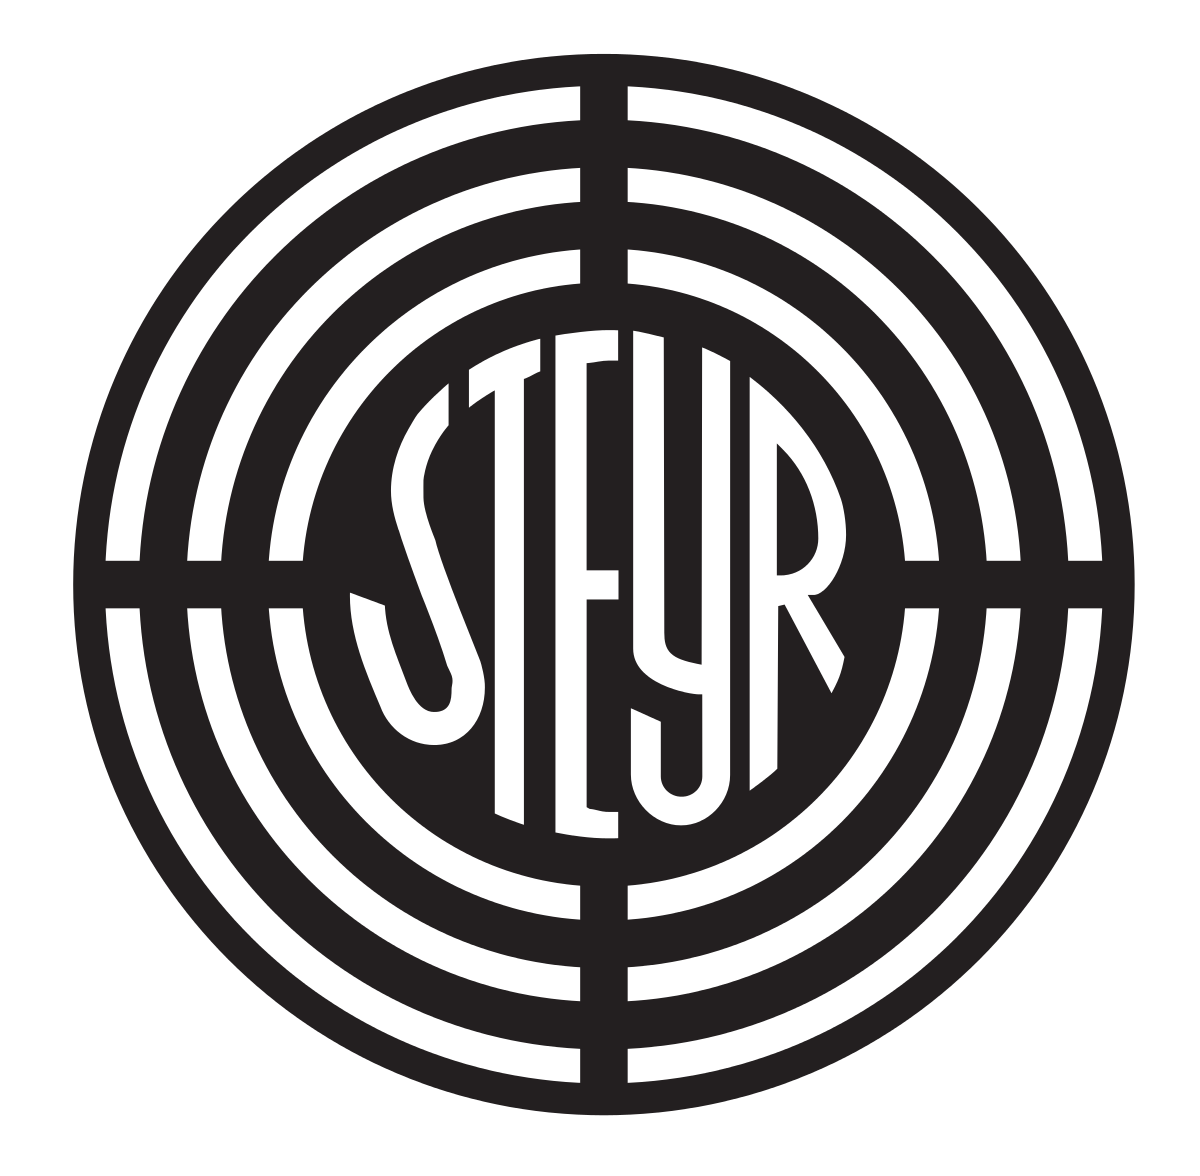 Steyr logo image